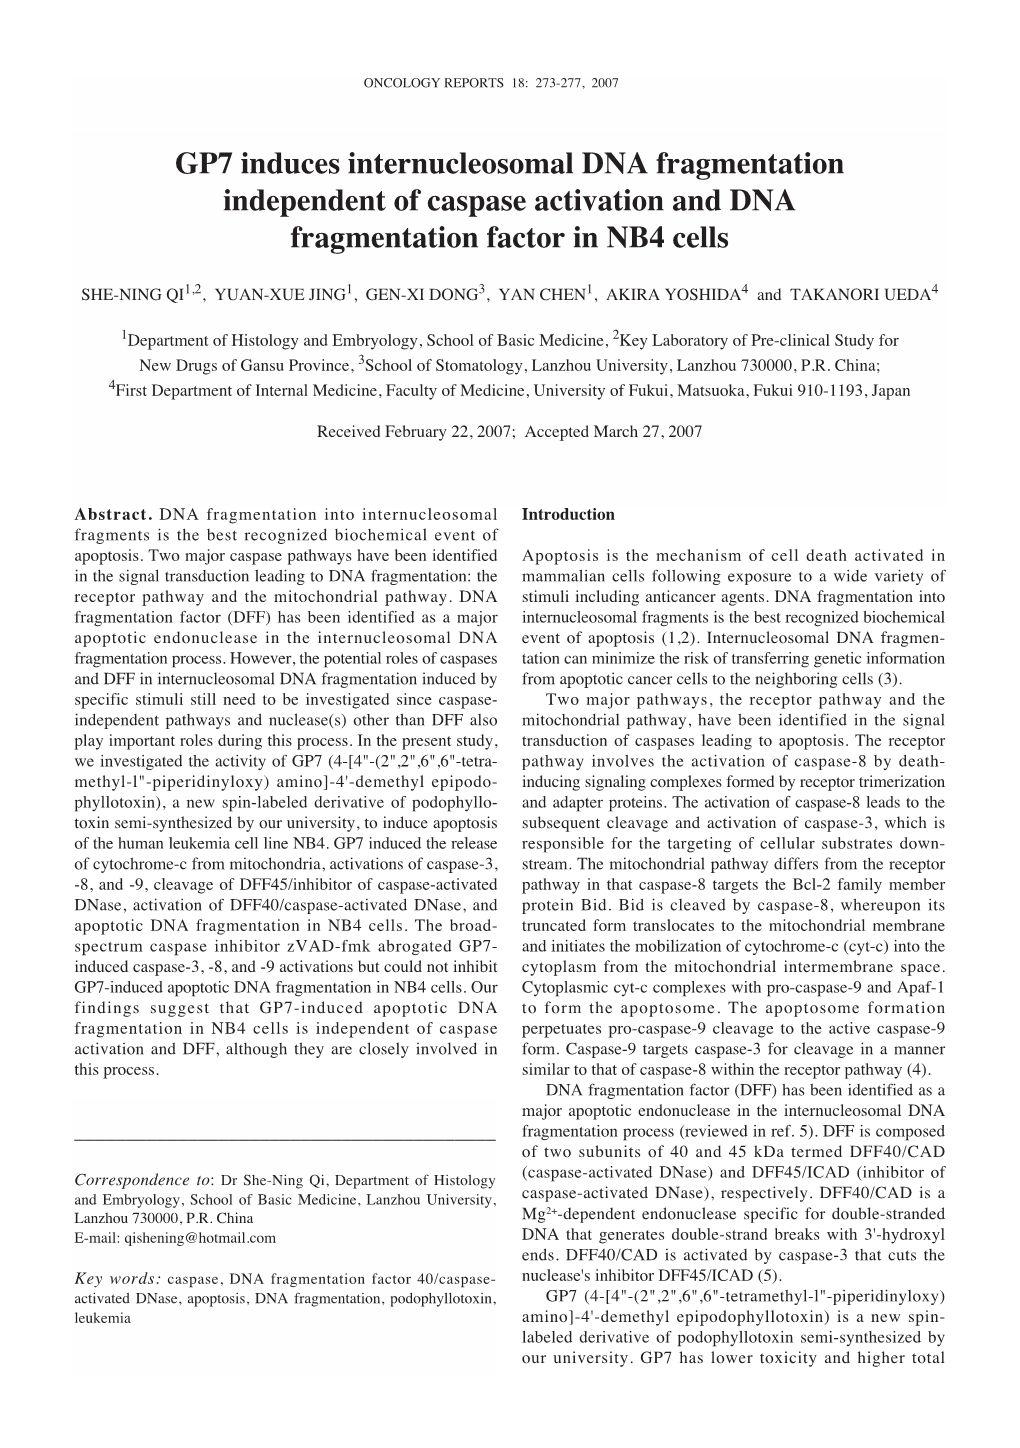 GP7 Induces Internucleosomal DNA Fragmentation Independent of Caspase Activation and DNA Fragmentation Factor in NB4 Cells